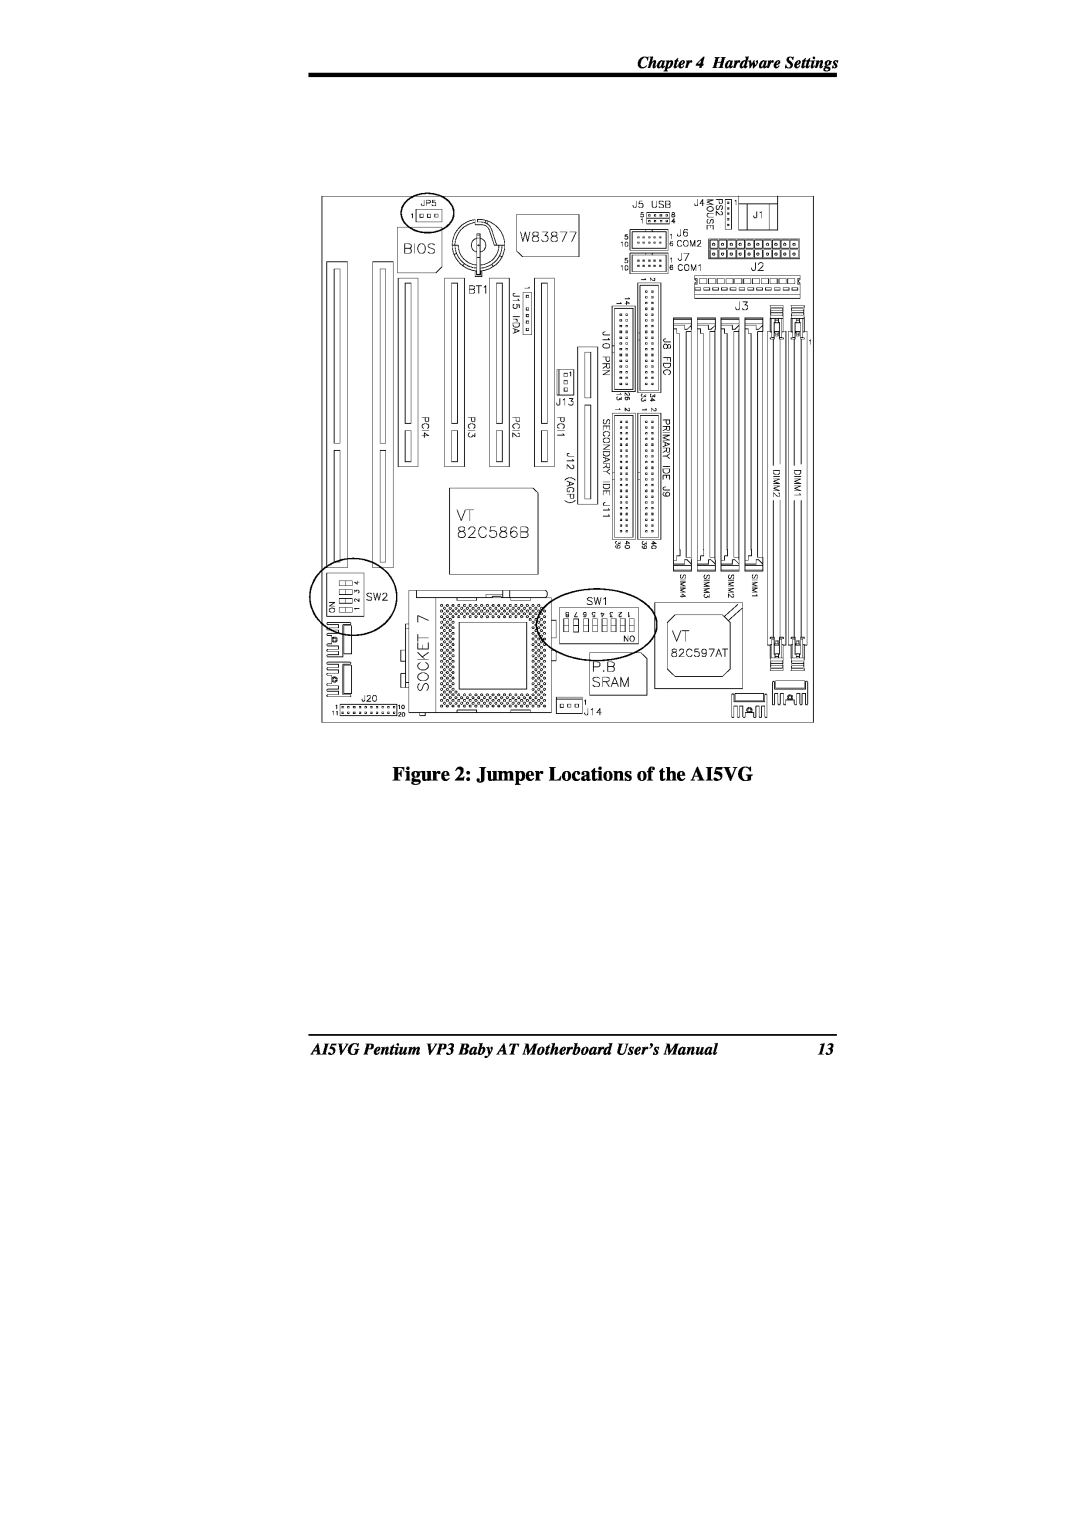 Intel user manual Jumper Locations of the AI5VG, Hardware Settings 